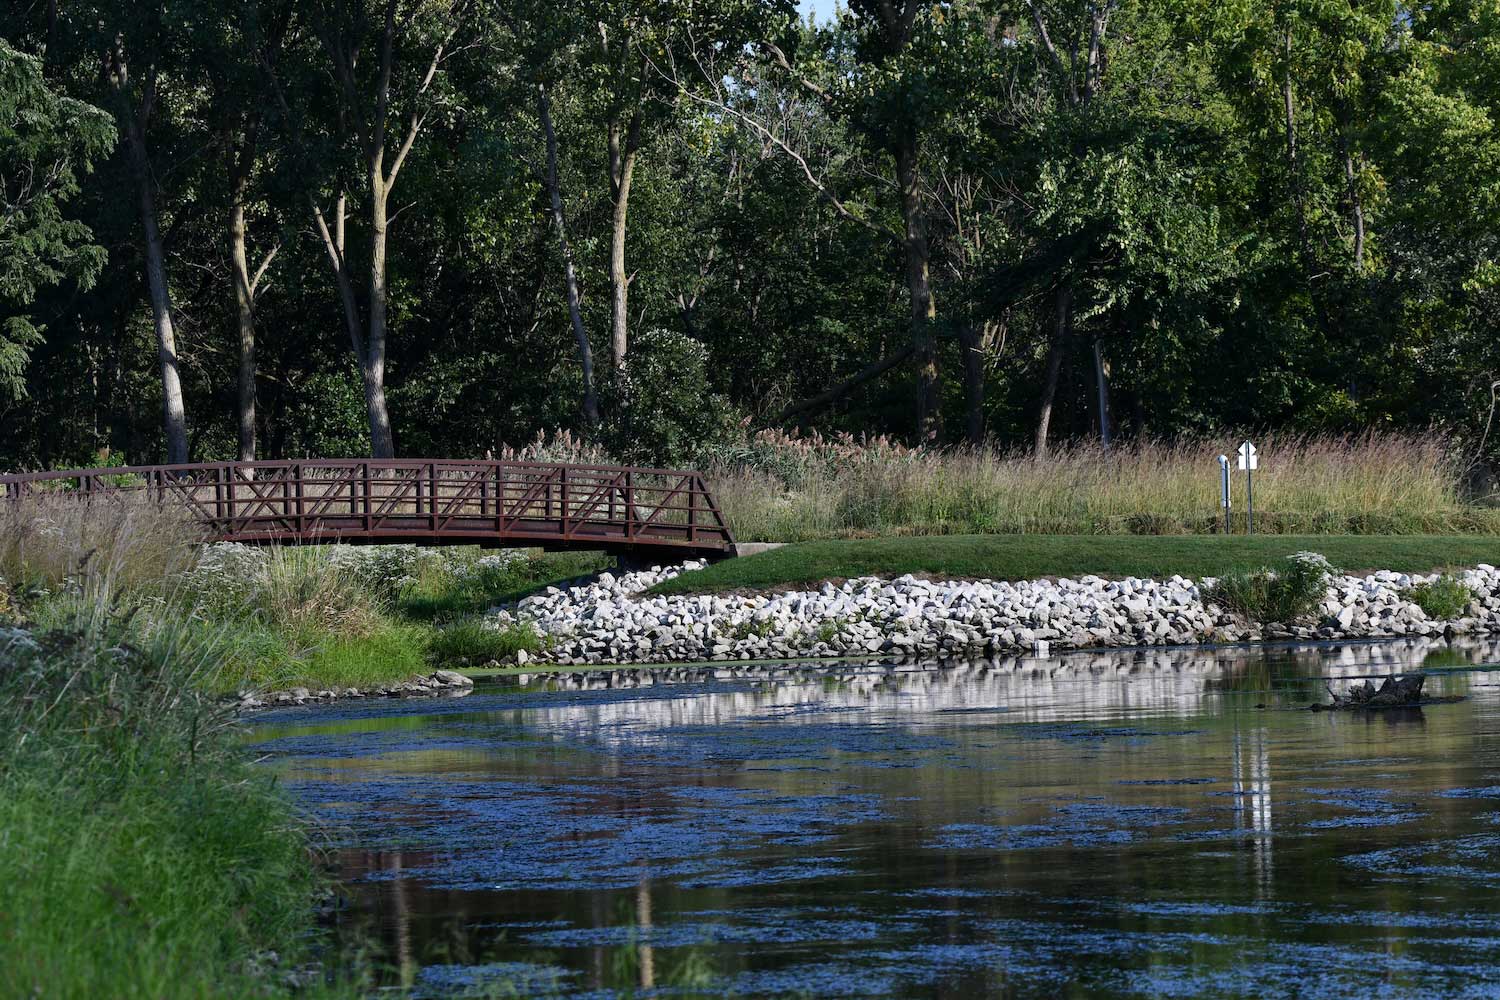 A summer view of a bridge spanning a pond.